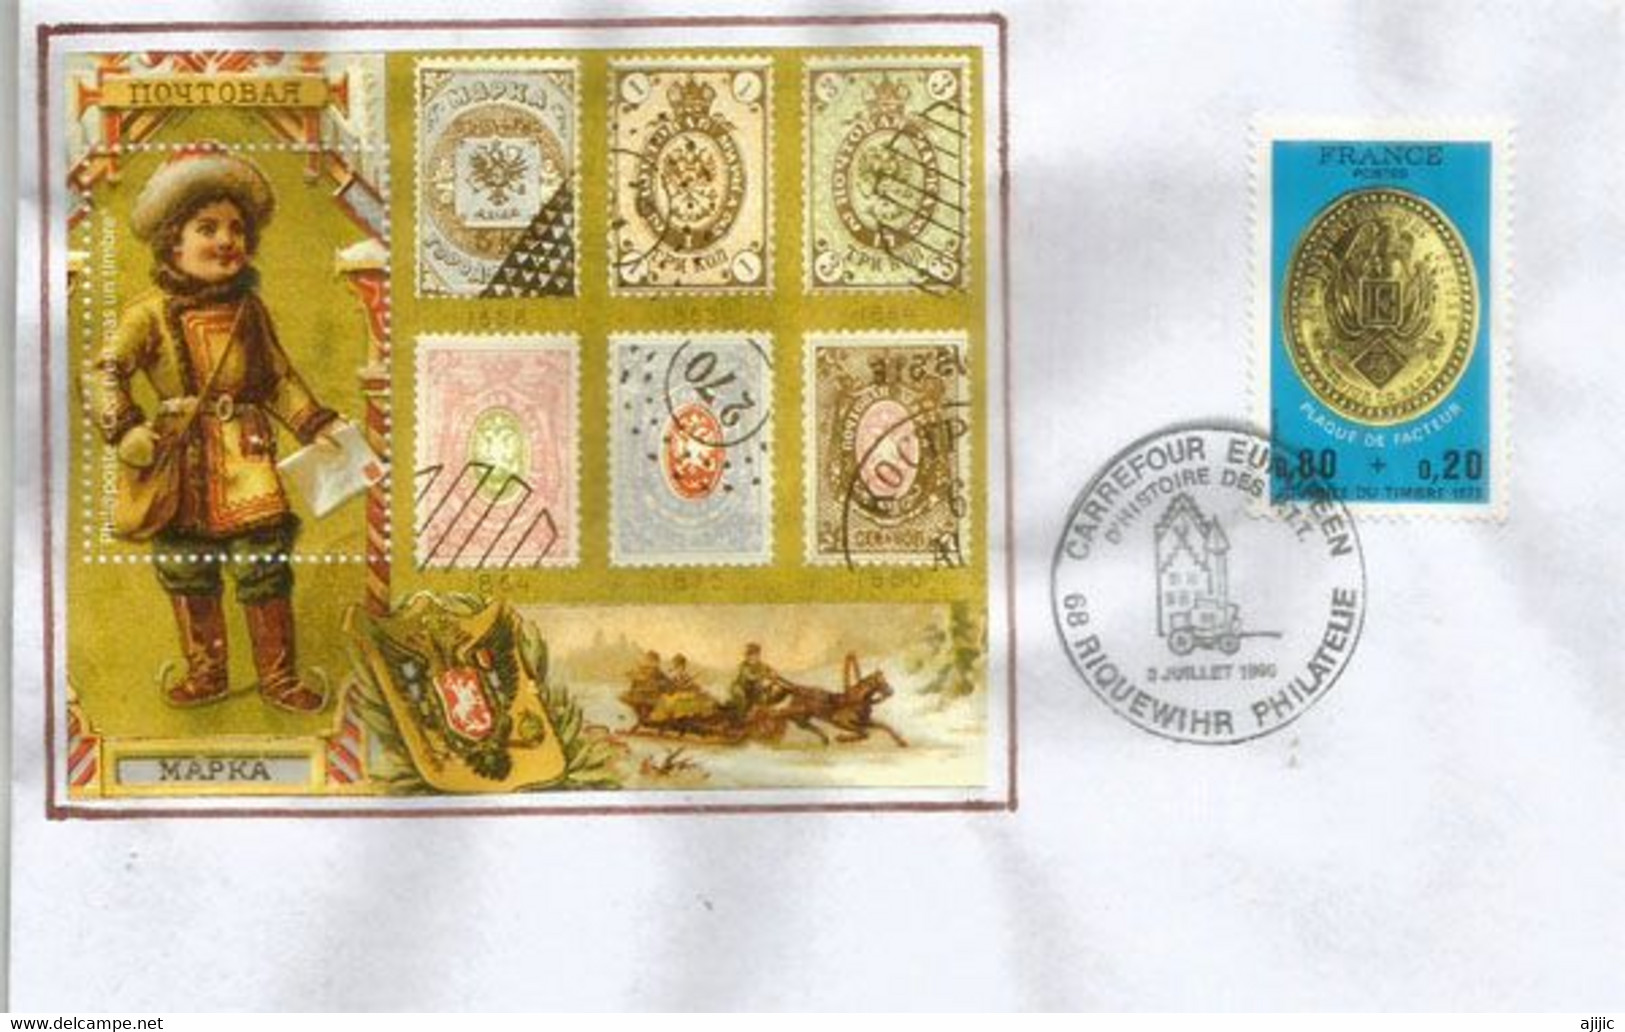 Postal Service History France With The Russian Empire, On Cover "Carrefour Europeen" Riquewihr. France. (Vignette) - Varietà E Curiosità